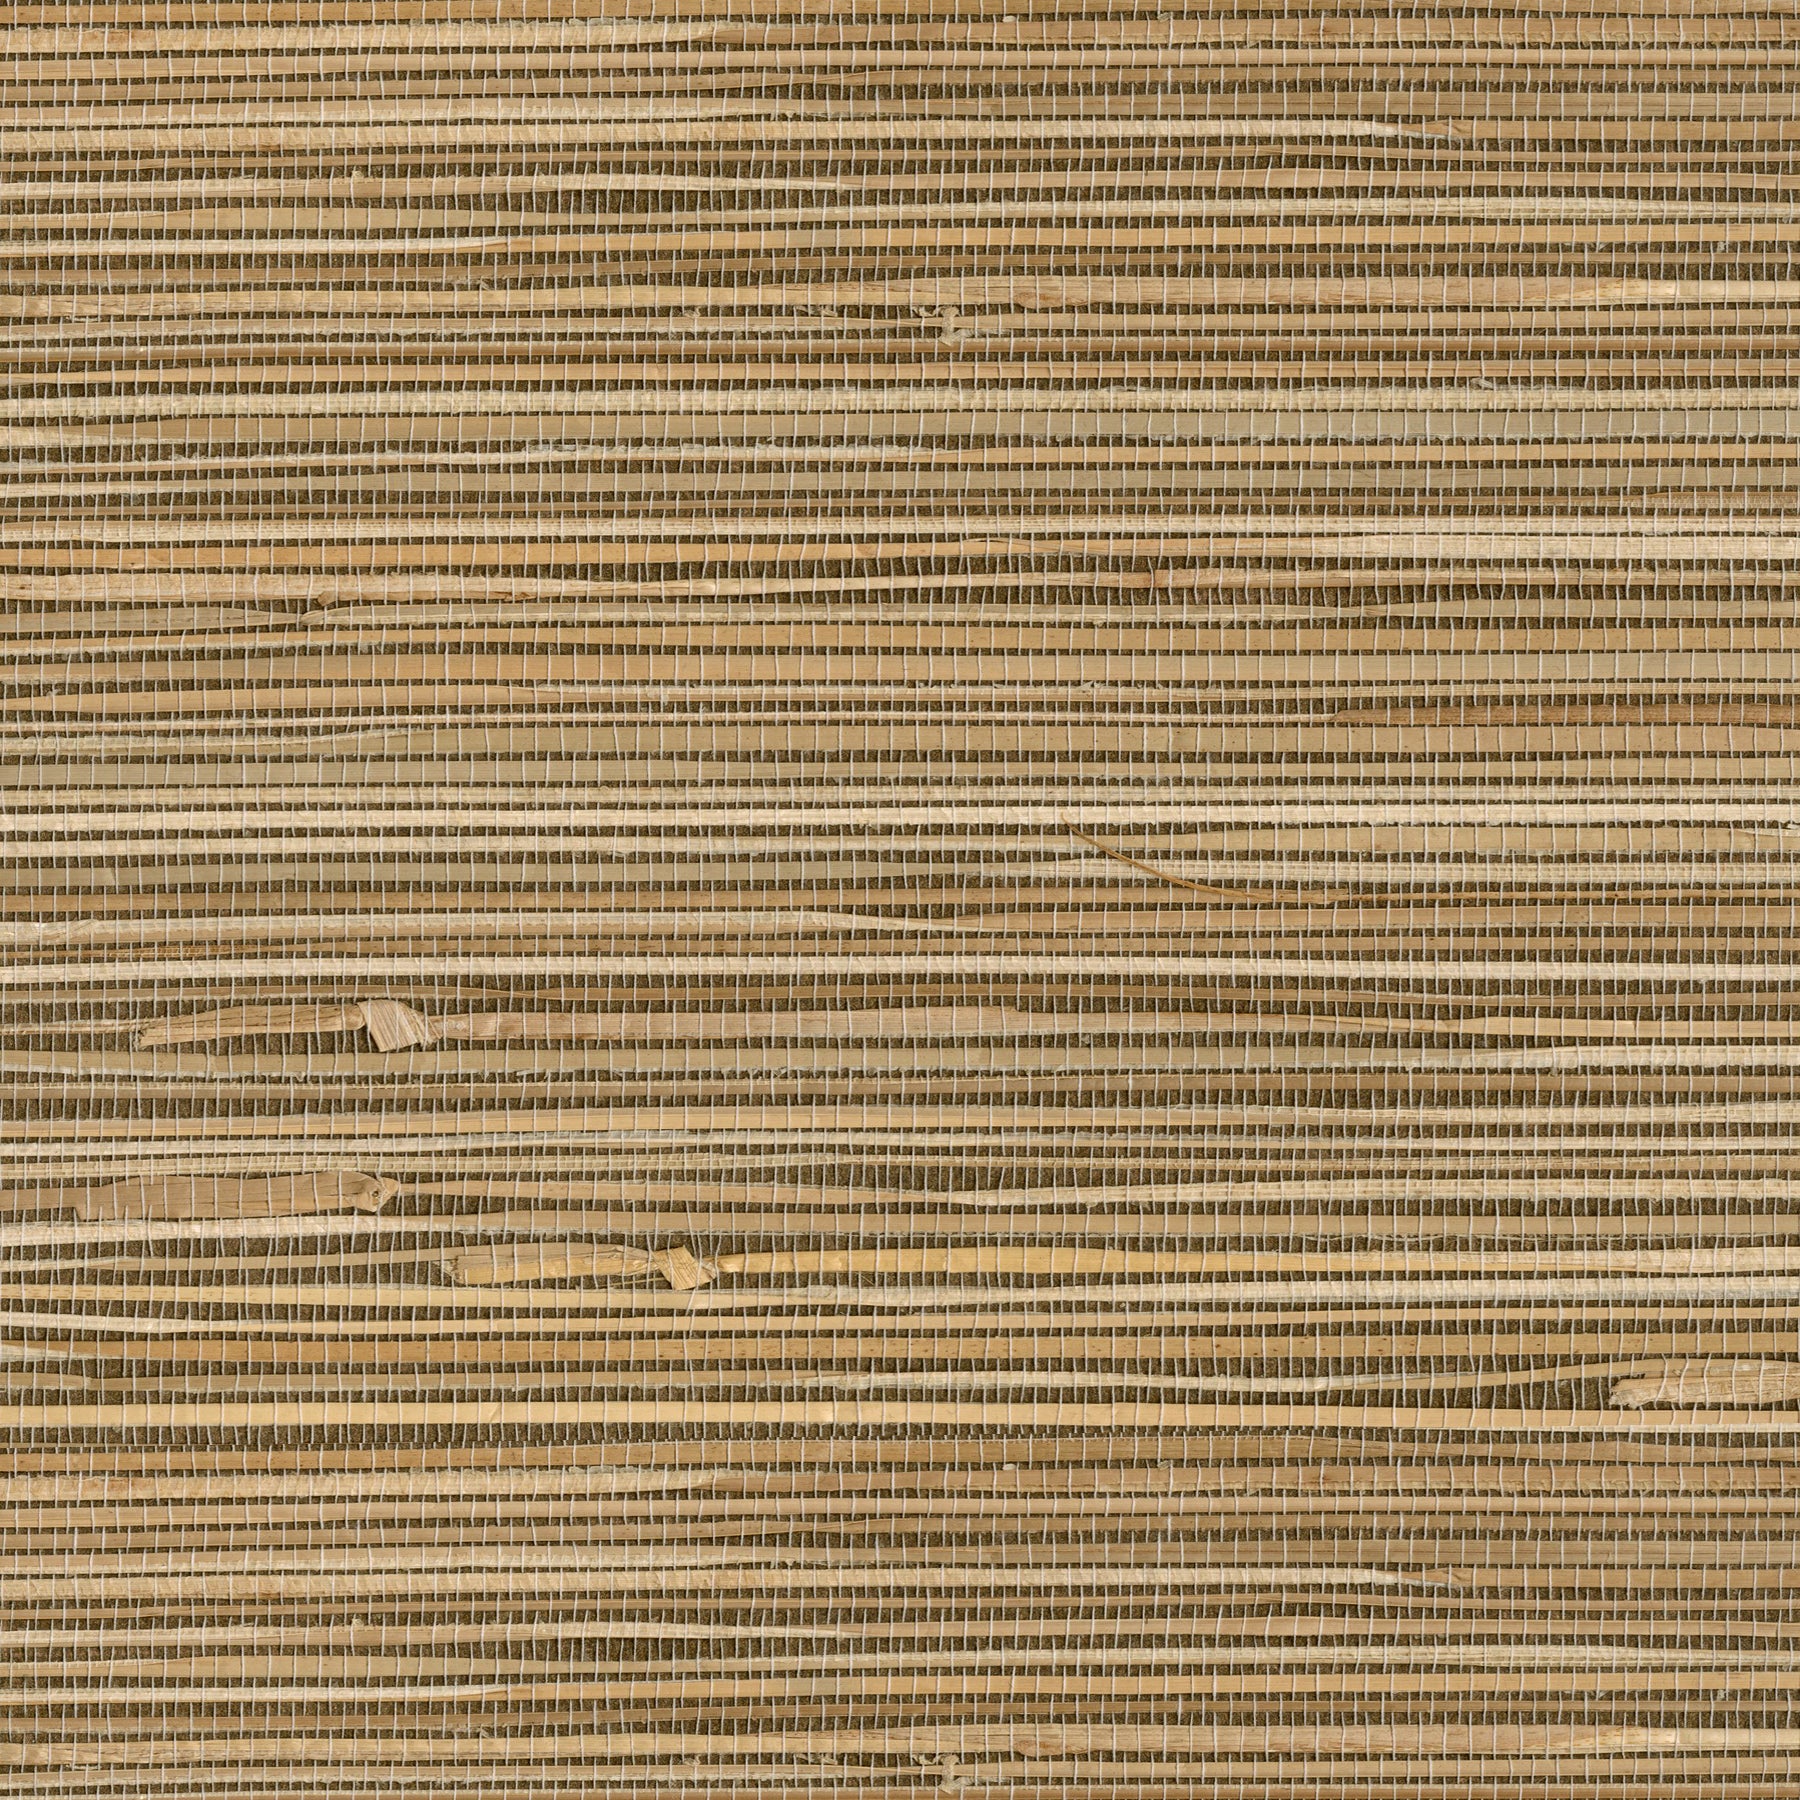 Looking 4018-0026 Grasscloth Portfolio Seiju Wheat Grasscloth Wheat by Advantage